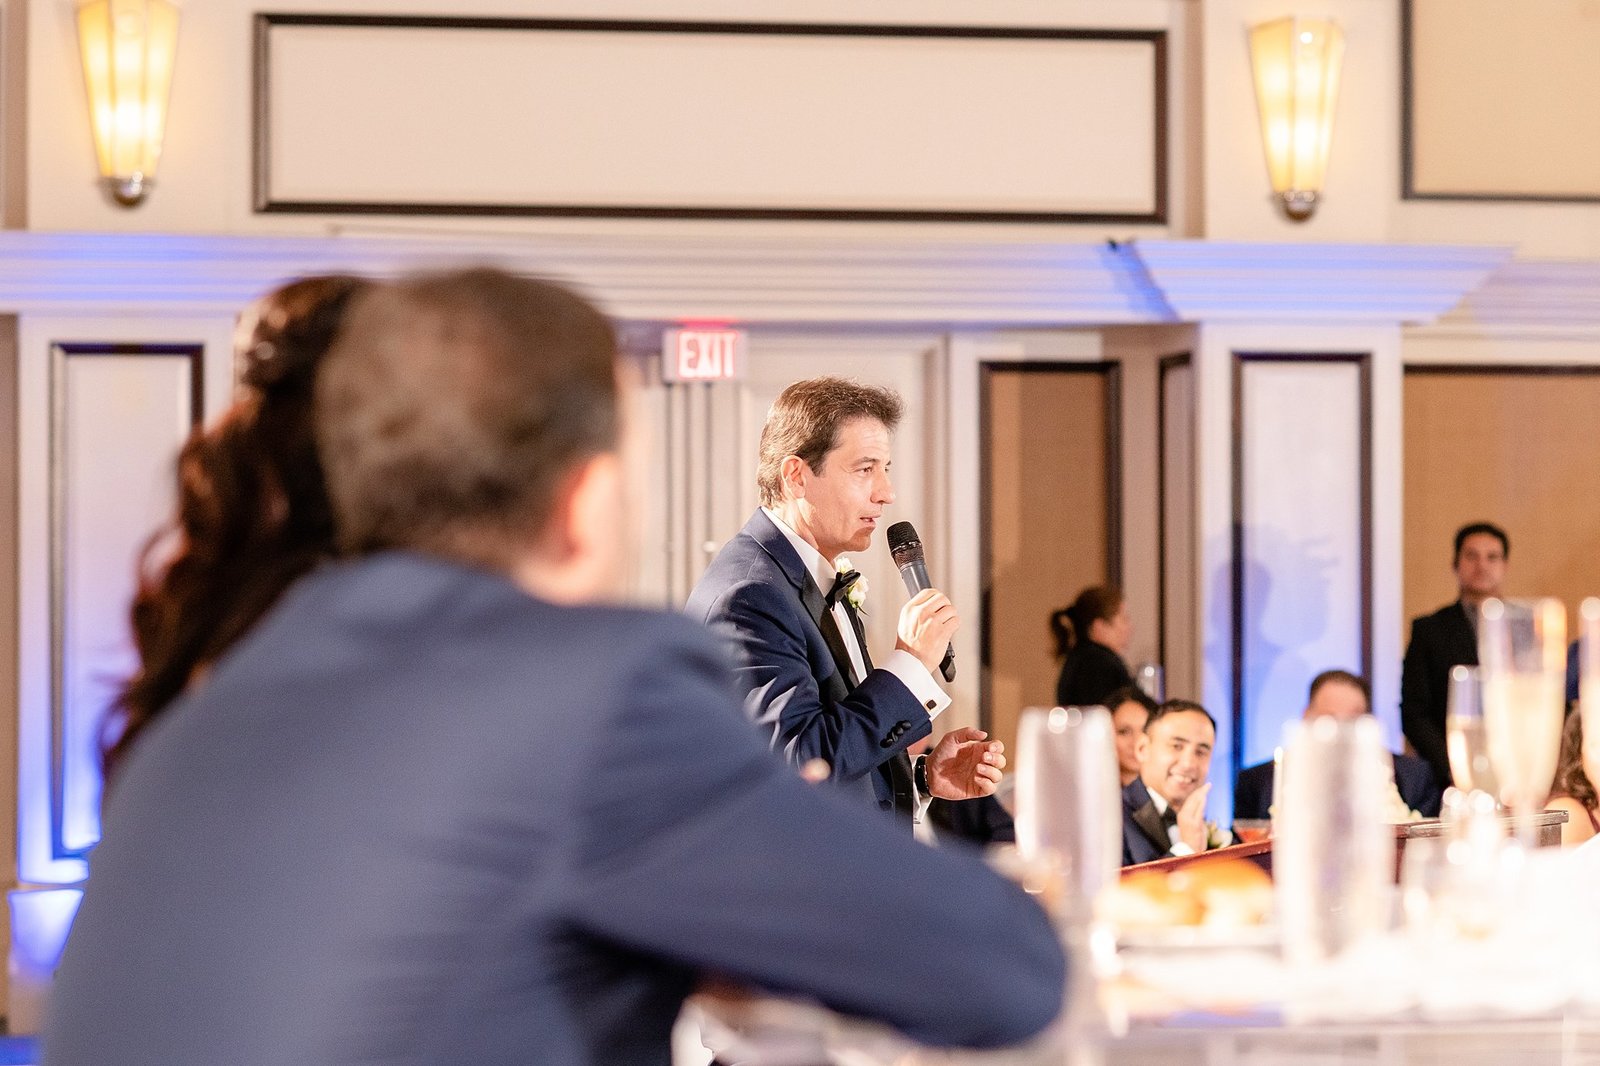 Best Man speech at reception | Orlando weddings